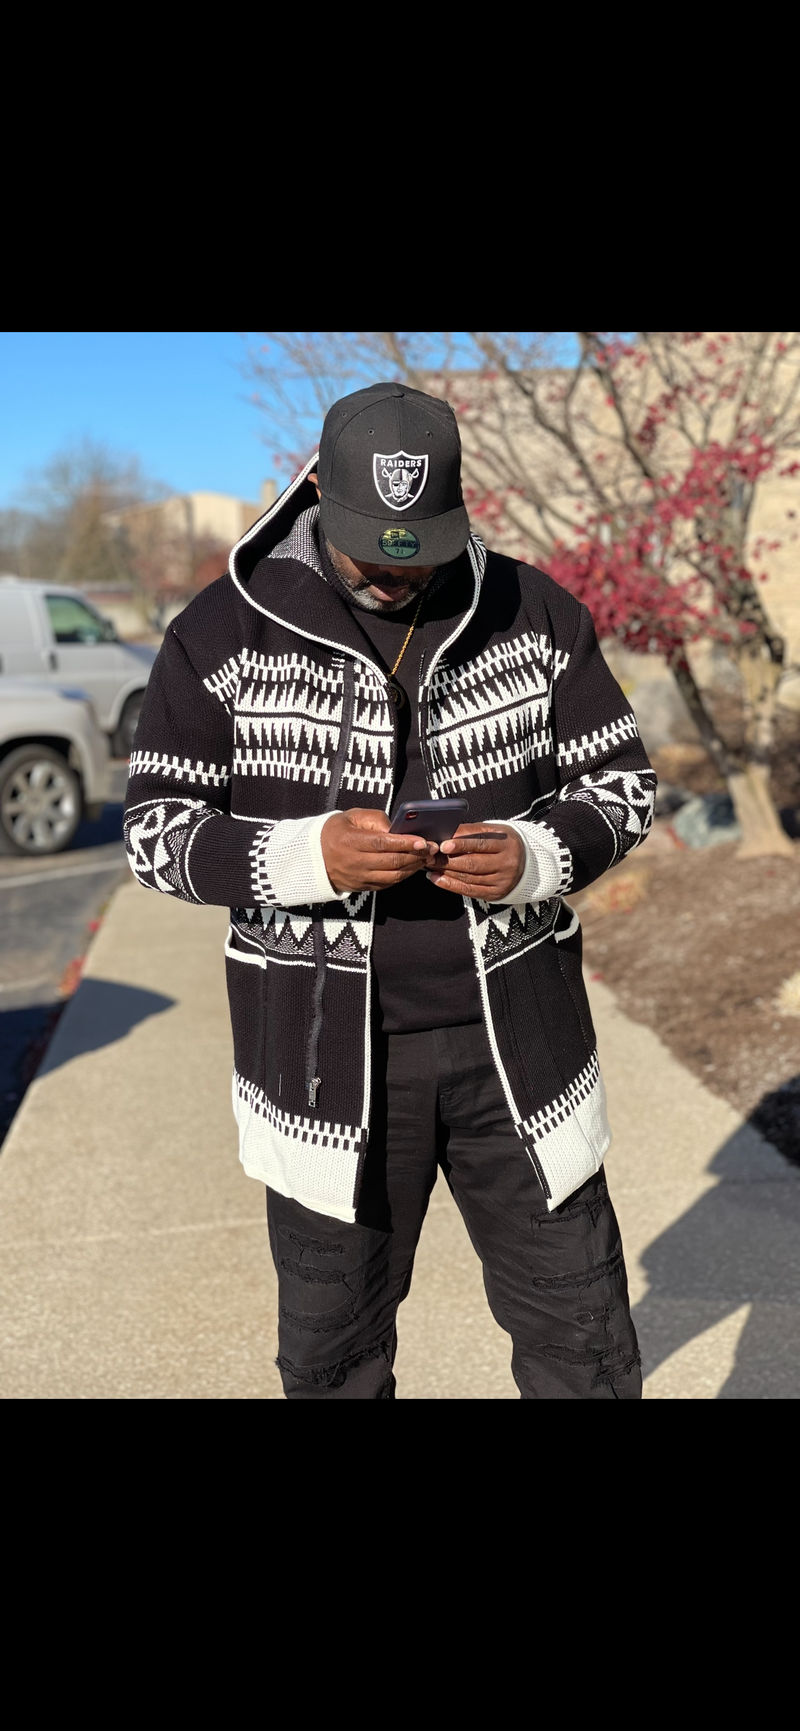 Alpine Cardigan Sweater 3/4 Length (Black/White) OIM